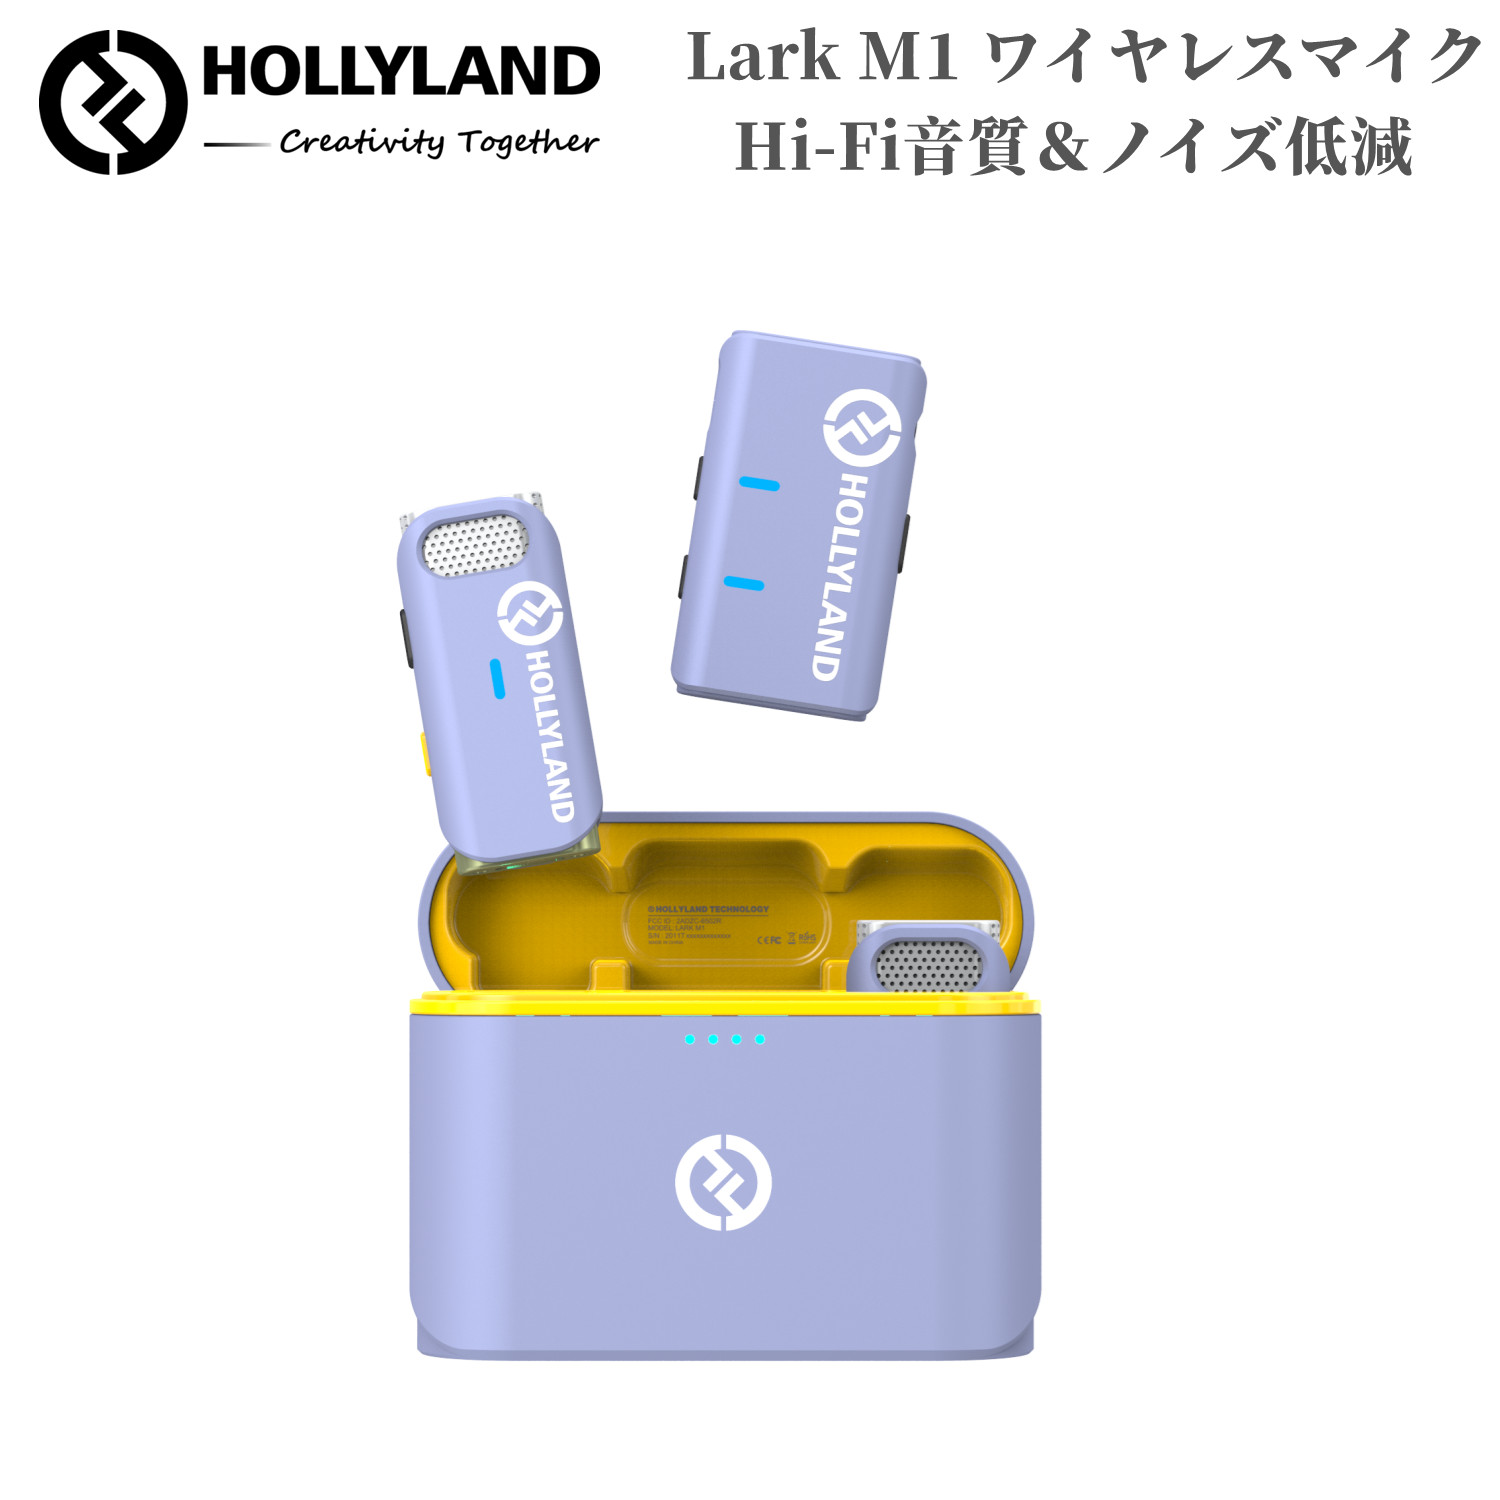 58%OFF!】 Hollyland Lark M1 ワイヤレスマイク収納充電ケース付き 自動ペアリング ピンマイク ワイヤレス スマホ カメラ  レコーダーなどに対応ワイヤレスマイクセット